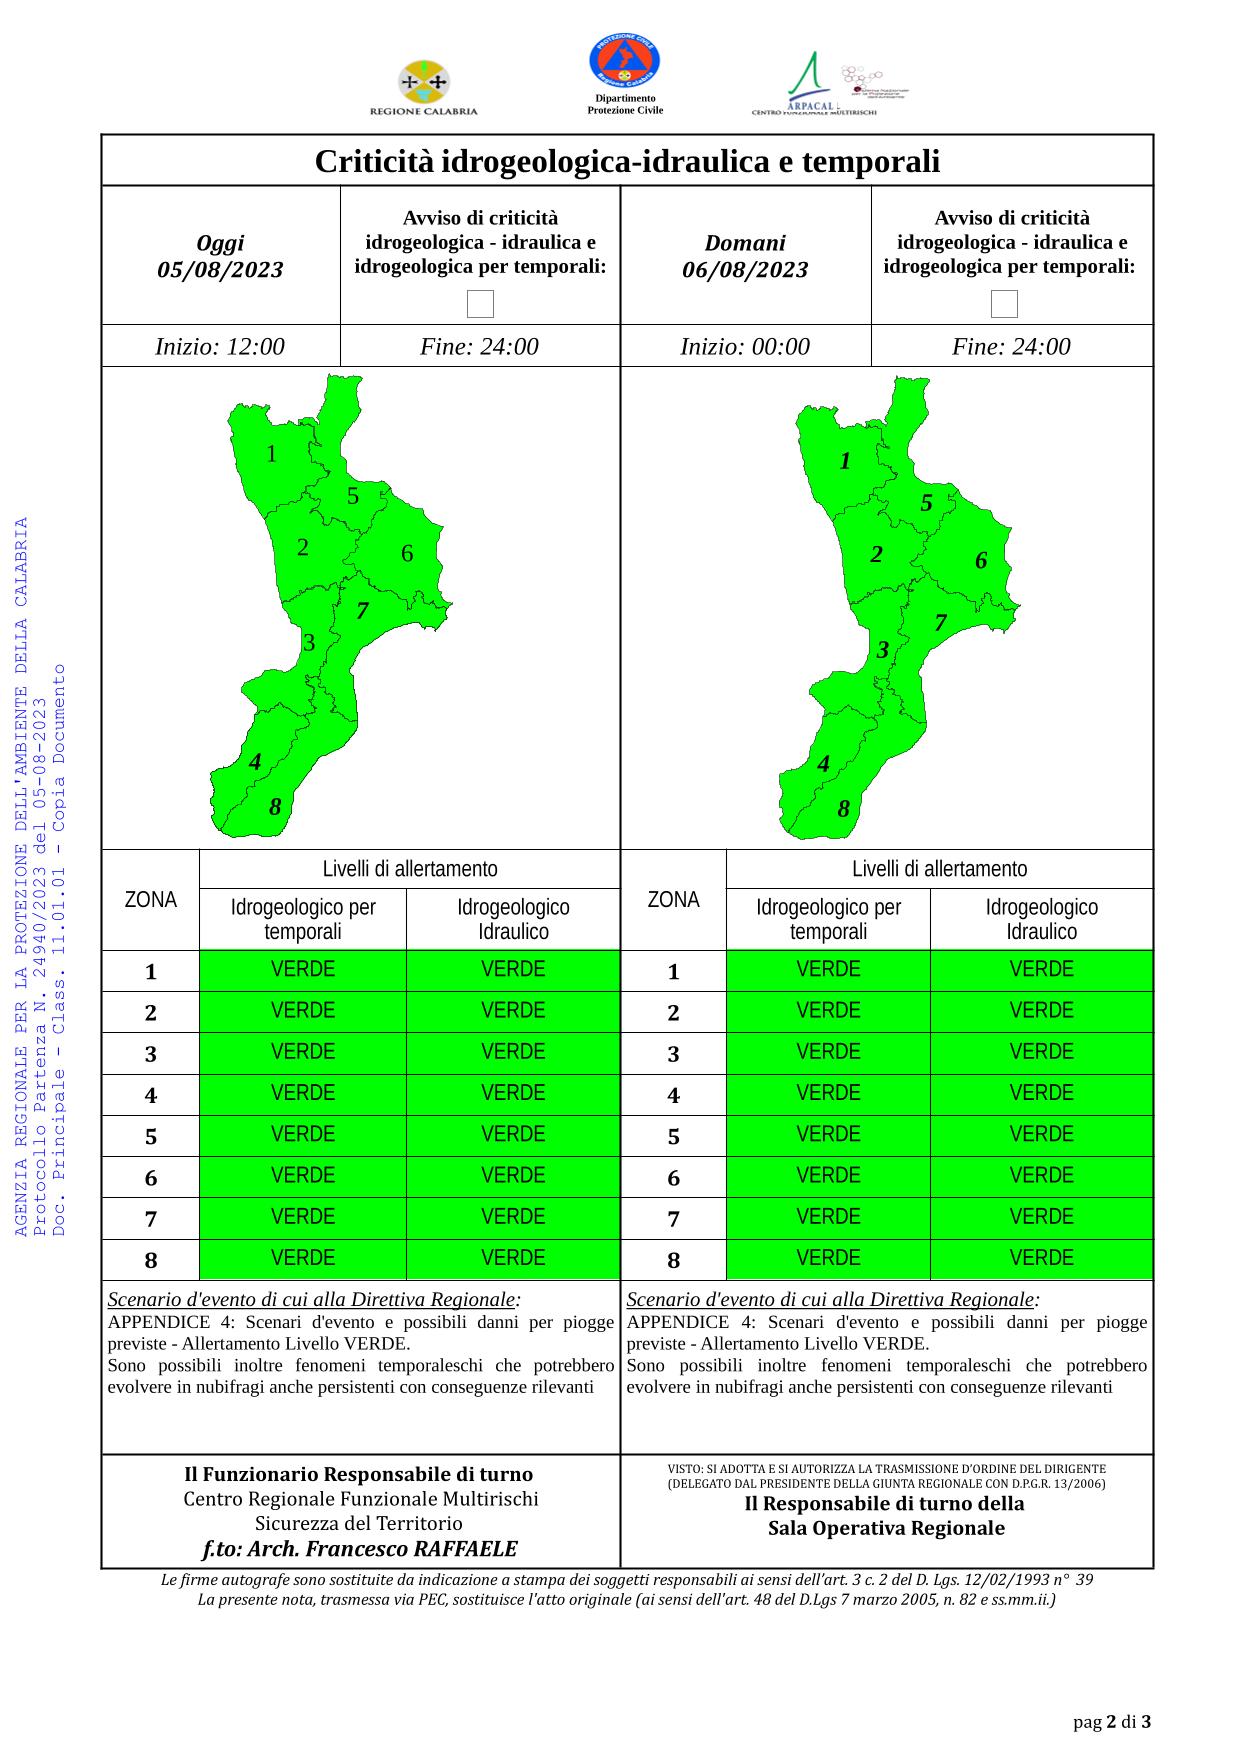 Criticità idrogeologica-idraulica e temporali in Calabria 05-08-2023